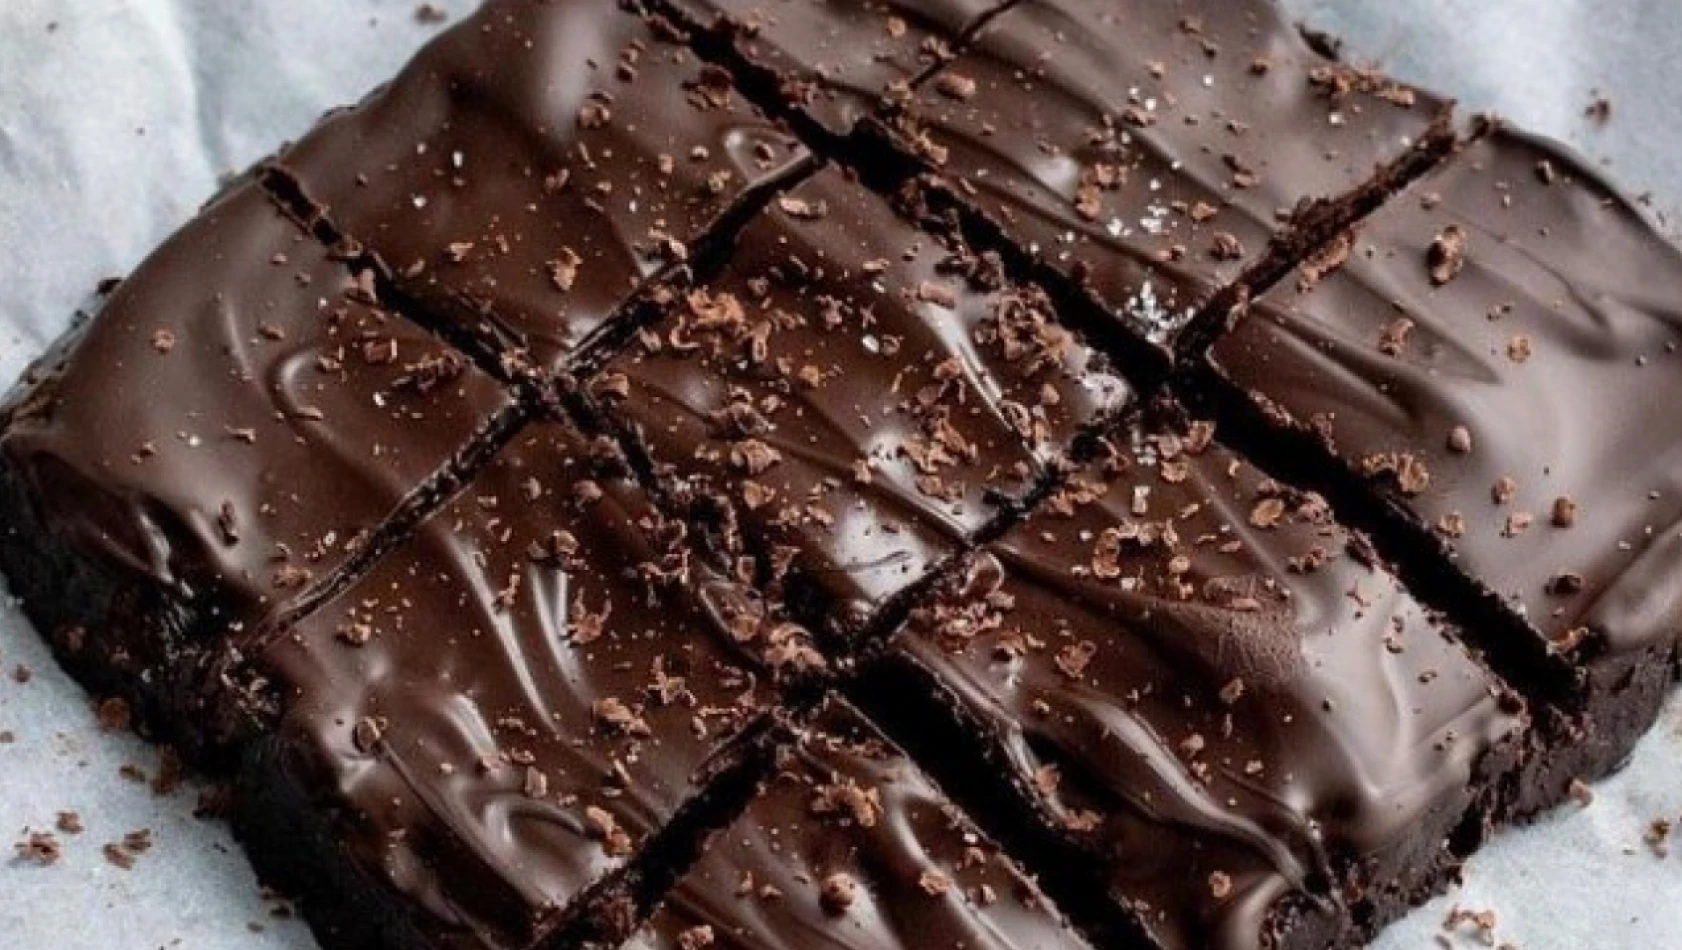 Bu tarifle kilo almadan çikolata ihtiyacınızı karşılayın!